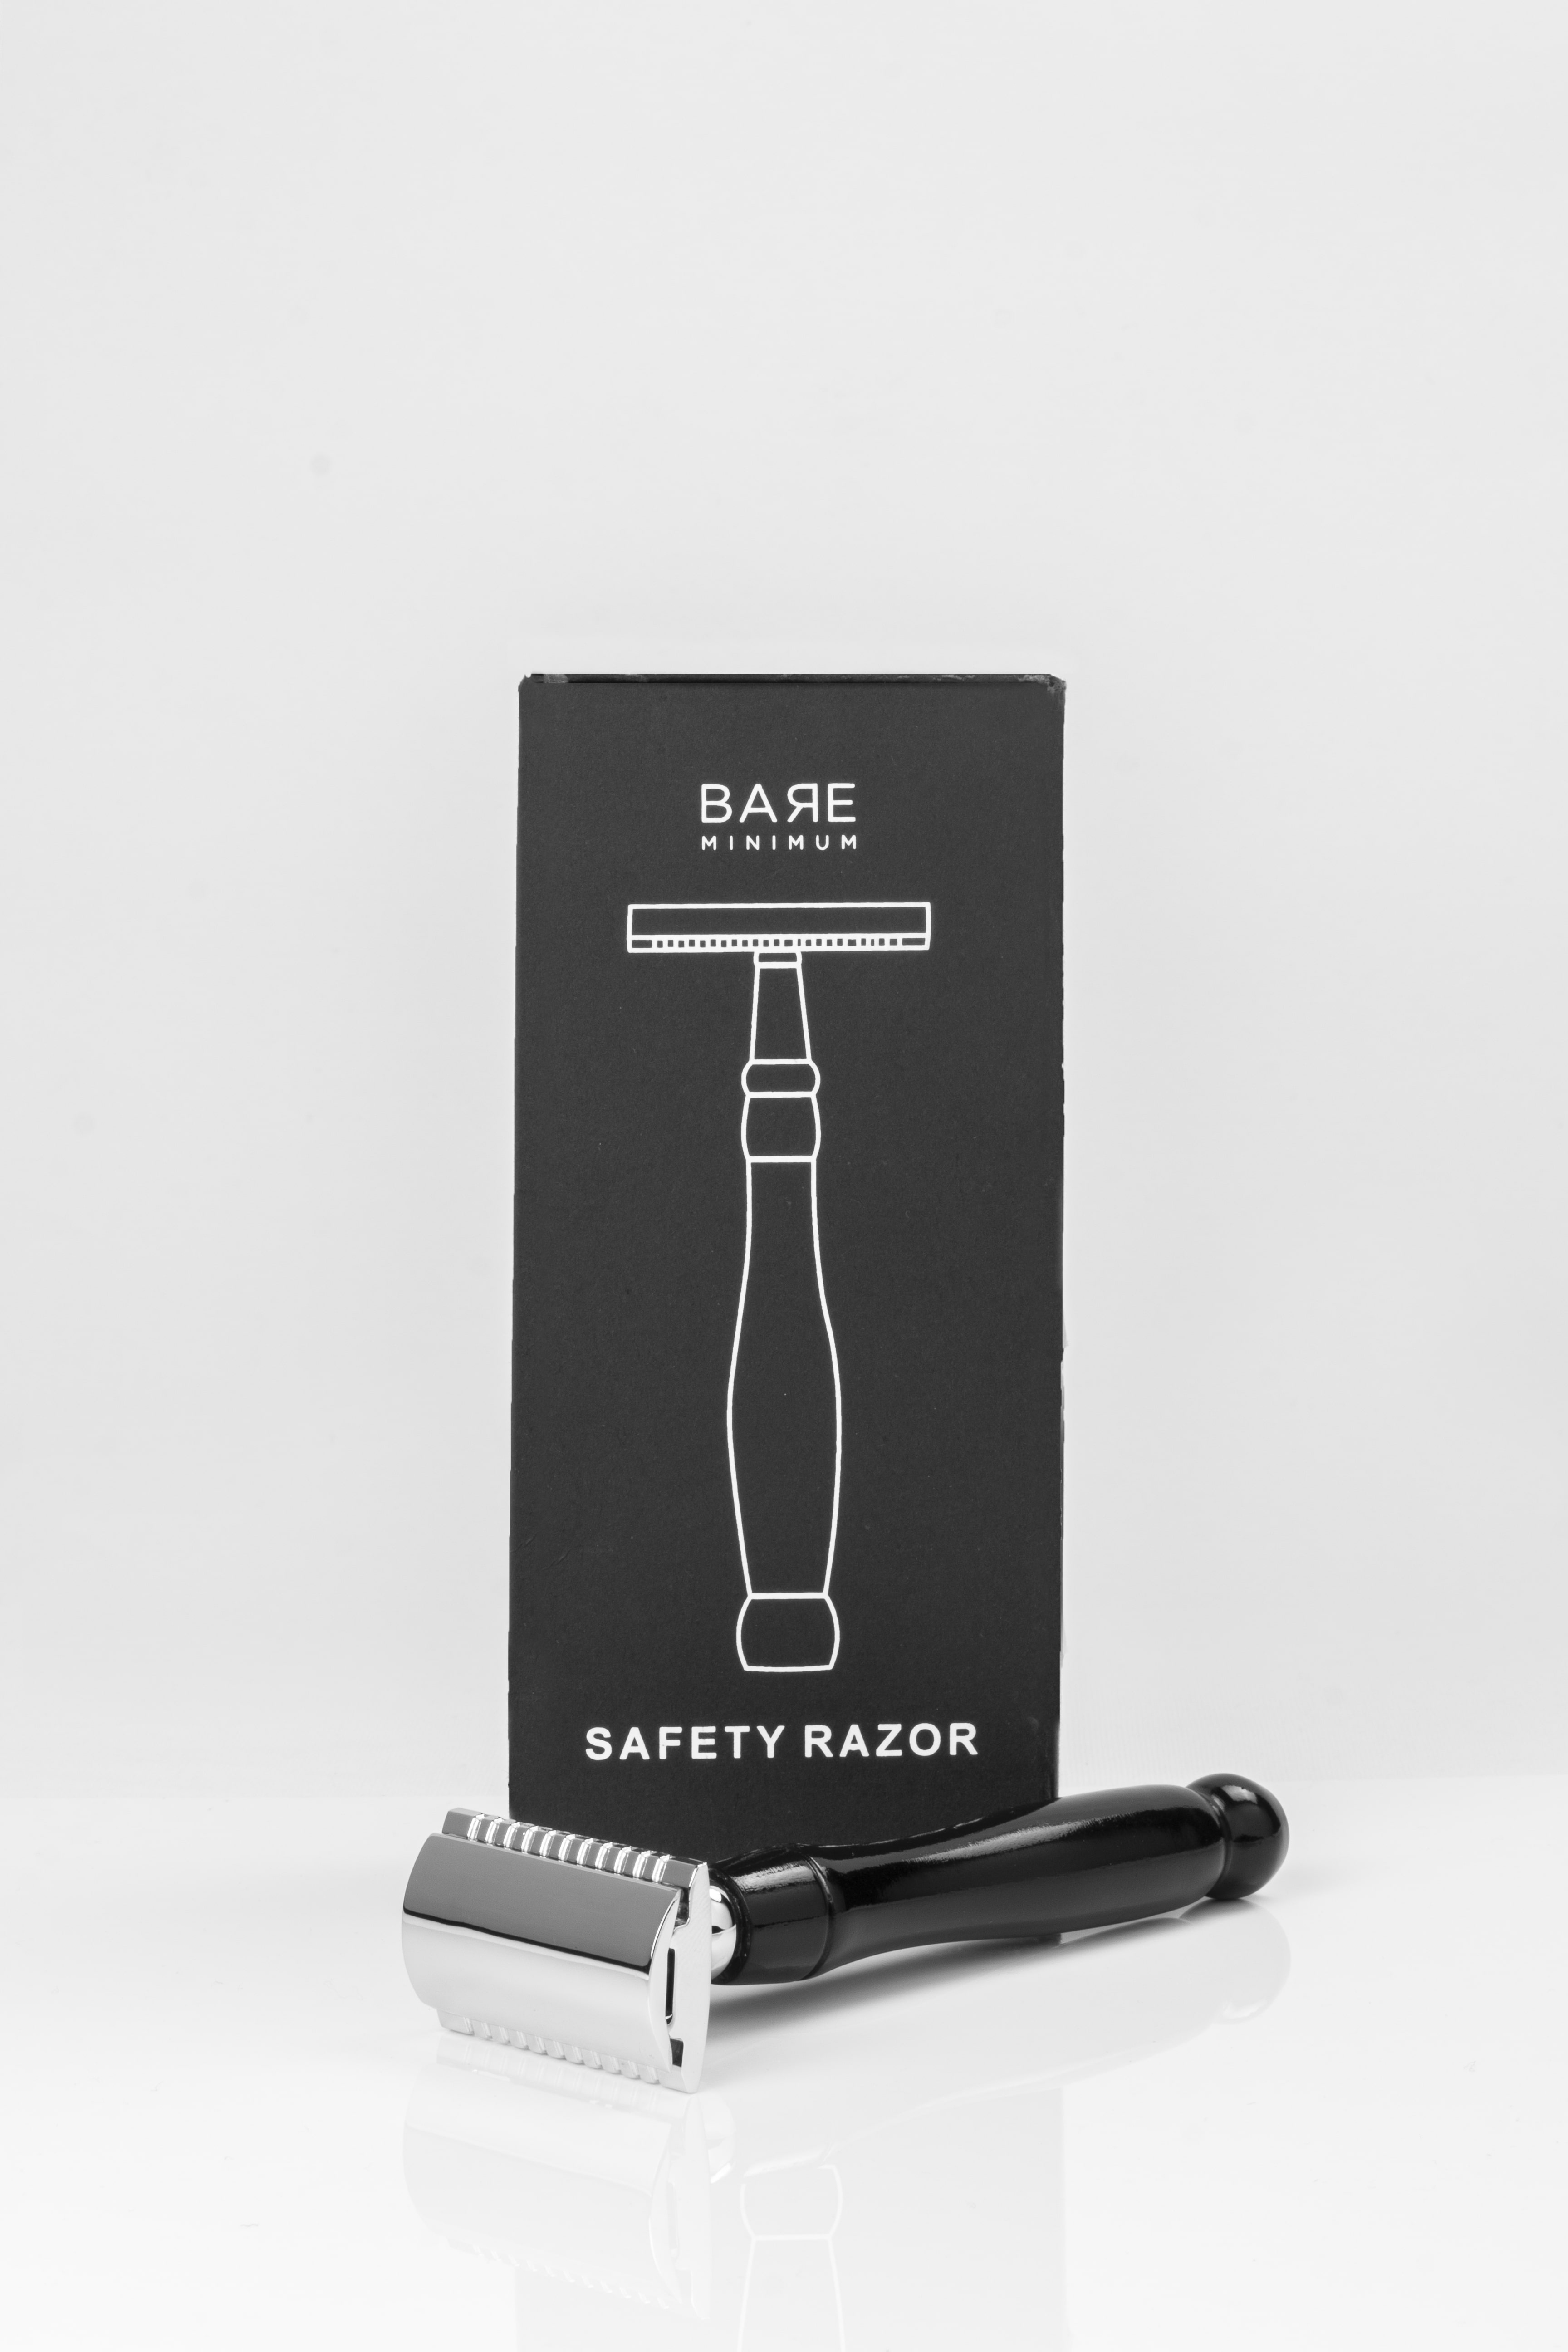 Bare Minimum shaving razor, gender-neutral, Includes 5 recyclable blades